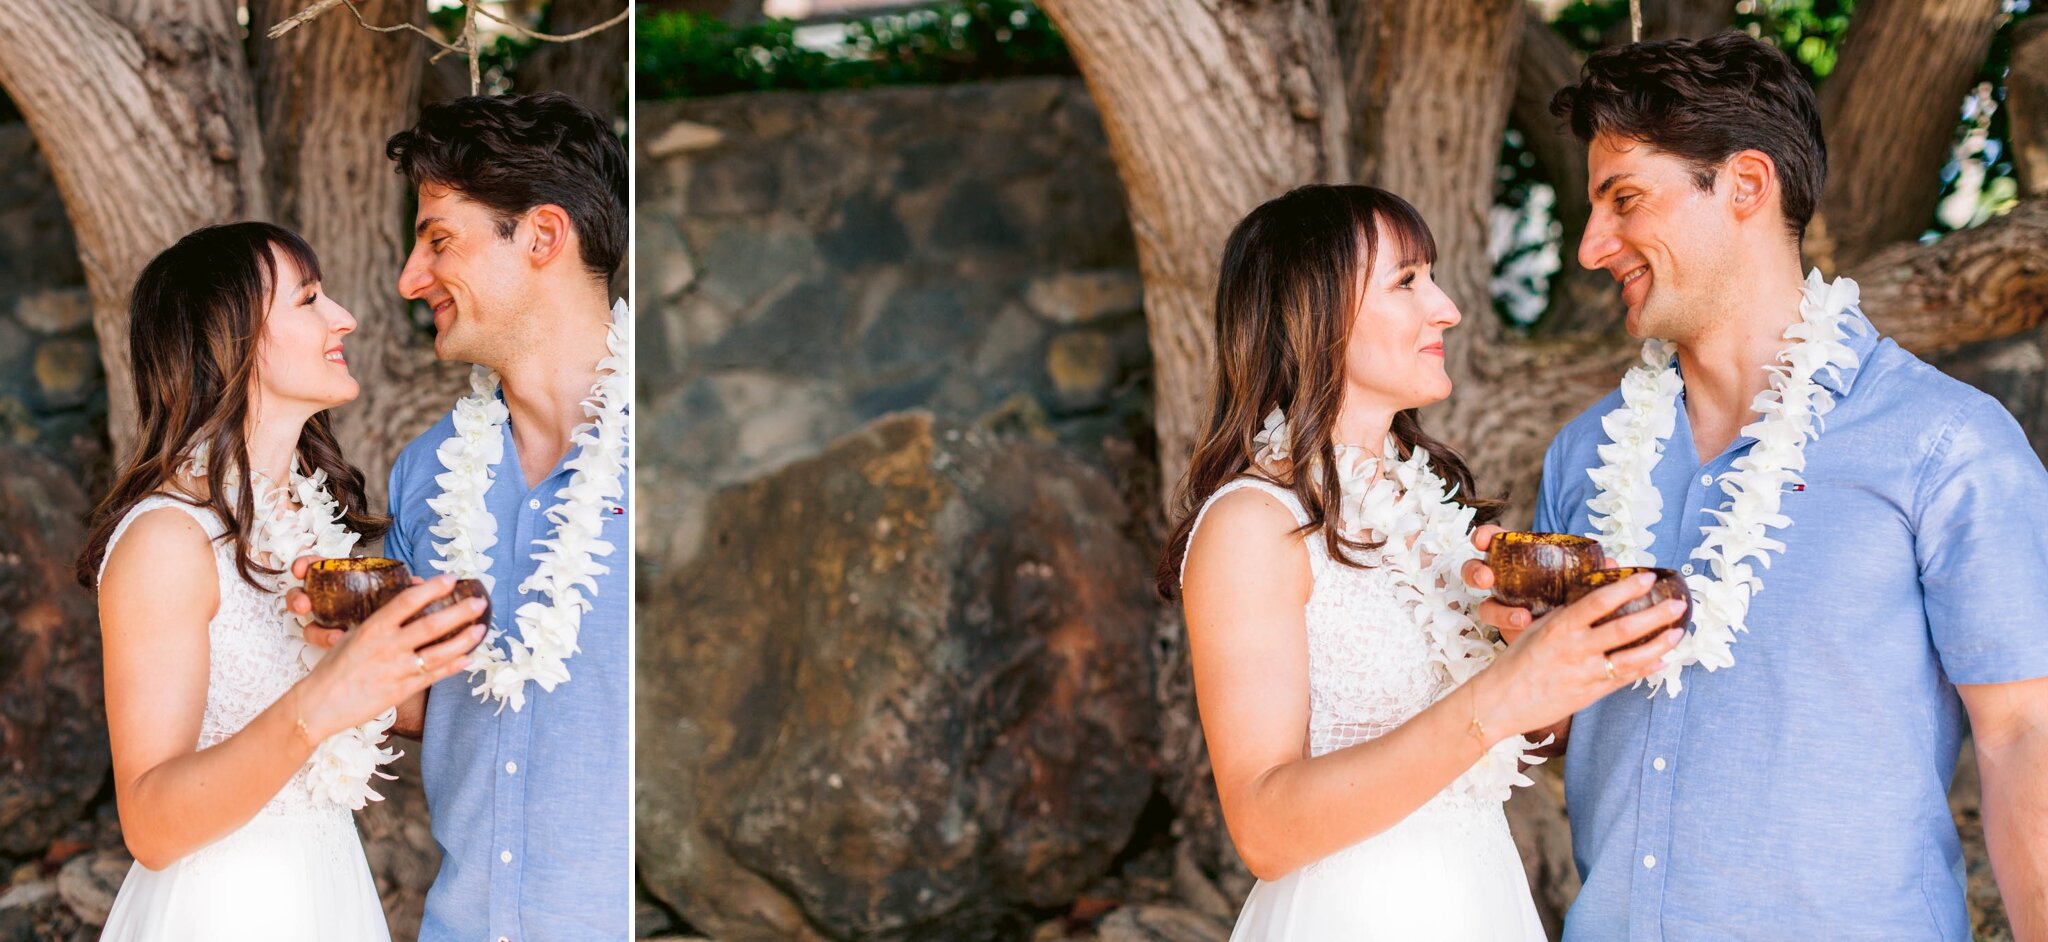 Wedding Cake by the Ocean - Elopement at Secret Cove Beach - Makau - Maui Wedding Photographer - Hawaii Strand Hochzeit